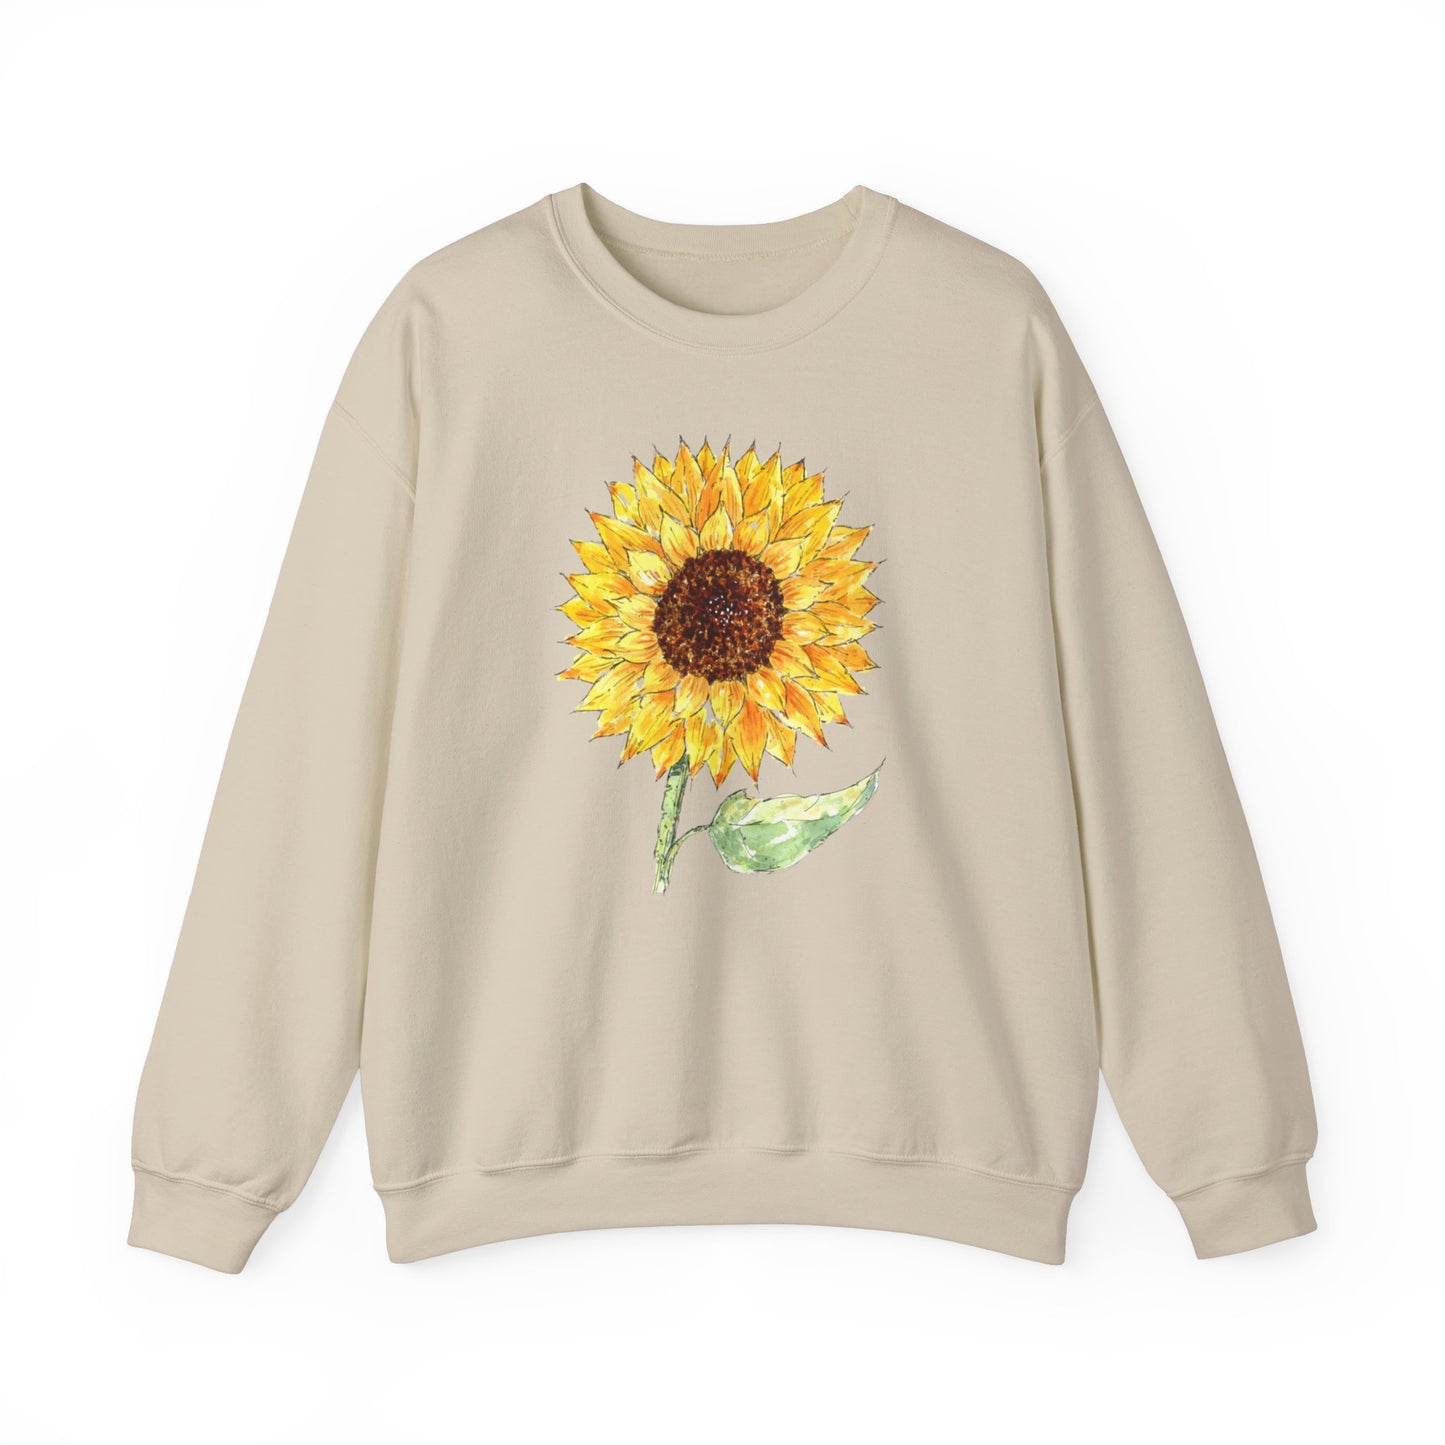 Sunflower Crew Neck Sweatshirt